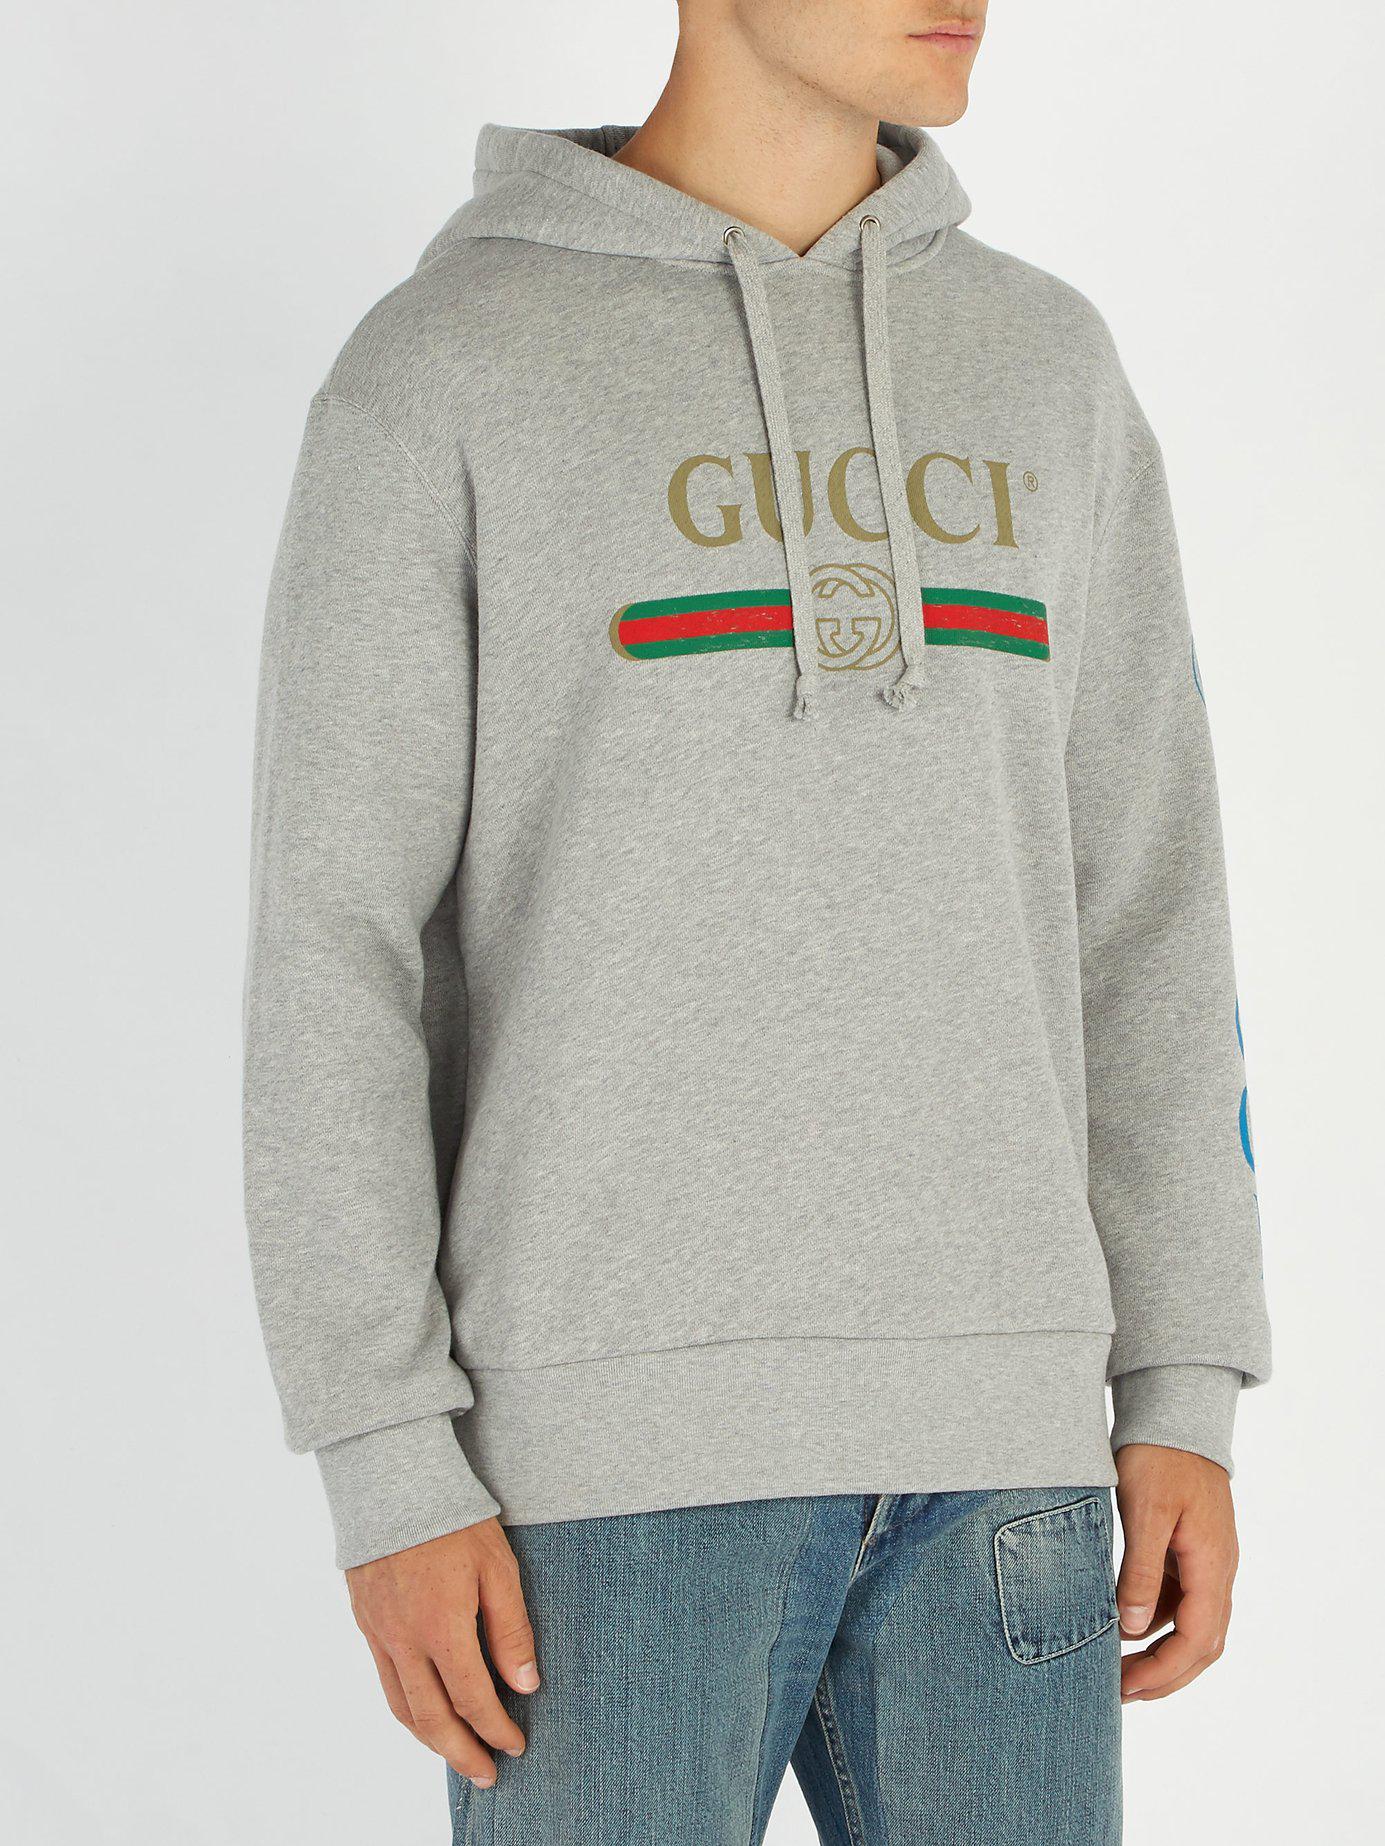 grøntsager Gepard Kan ikke læse eller skrive Gucci Dragon And Logo Hooded Sweatshirt in Gray for Men | Lyst